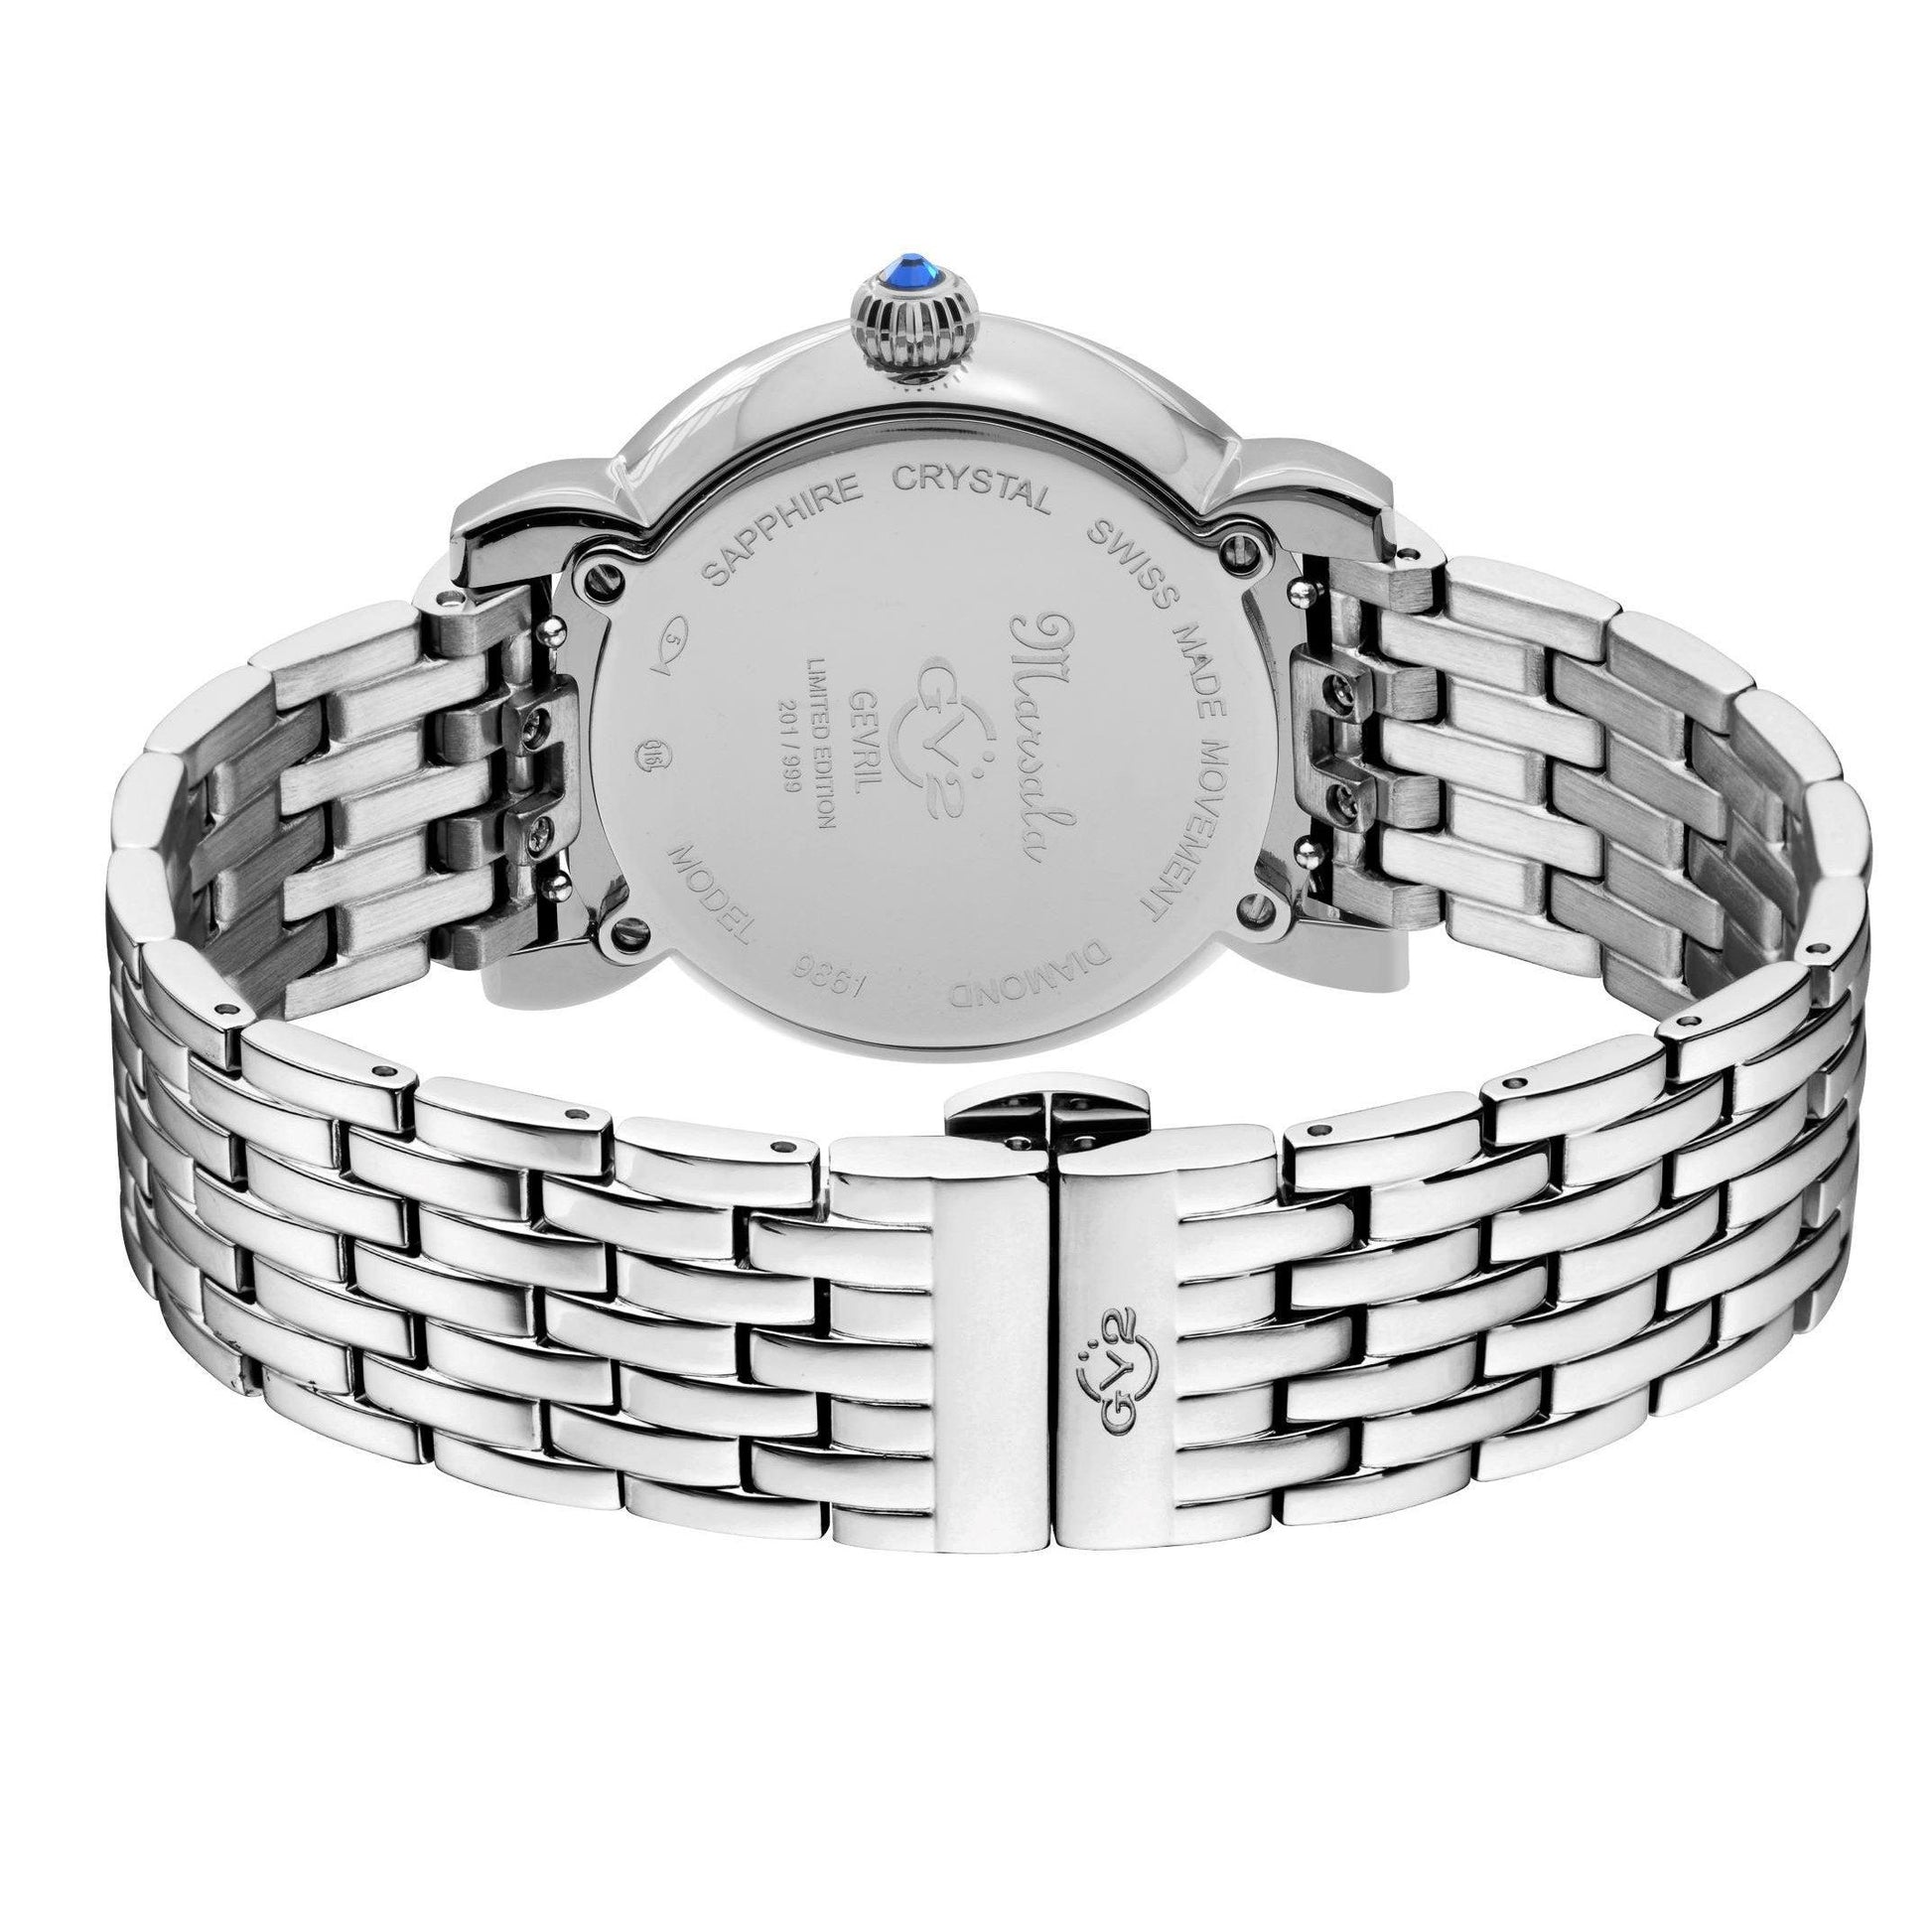 Gevril-Luxury-Swiss-Watches-GV2 Marsala Diamond-9861B